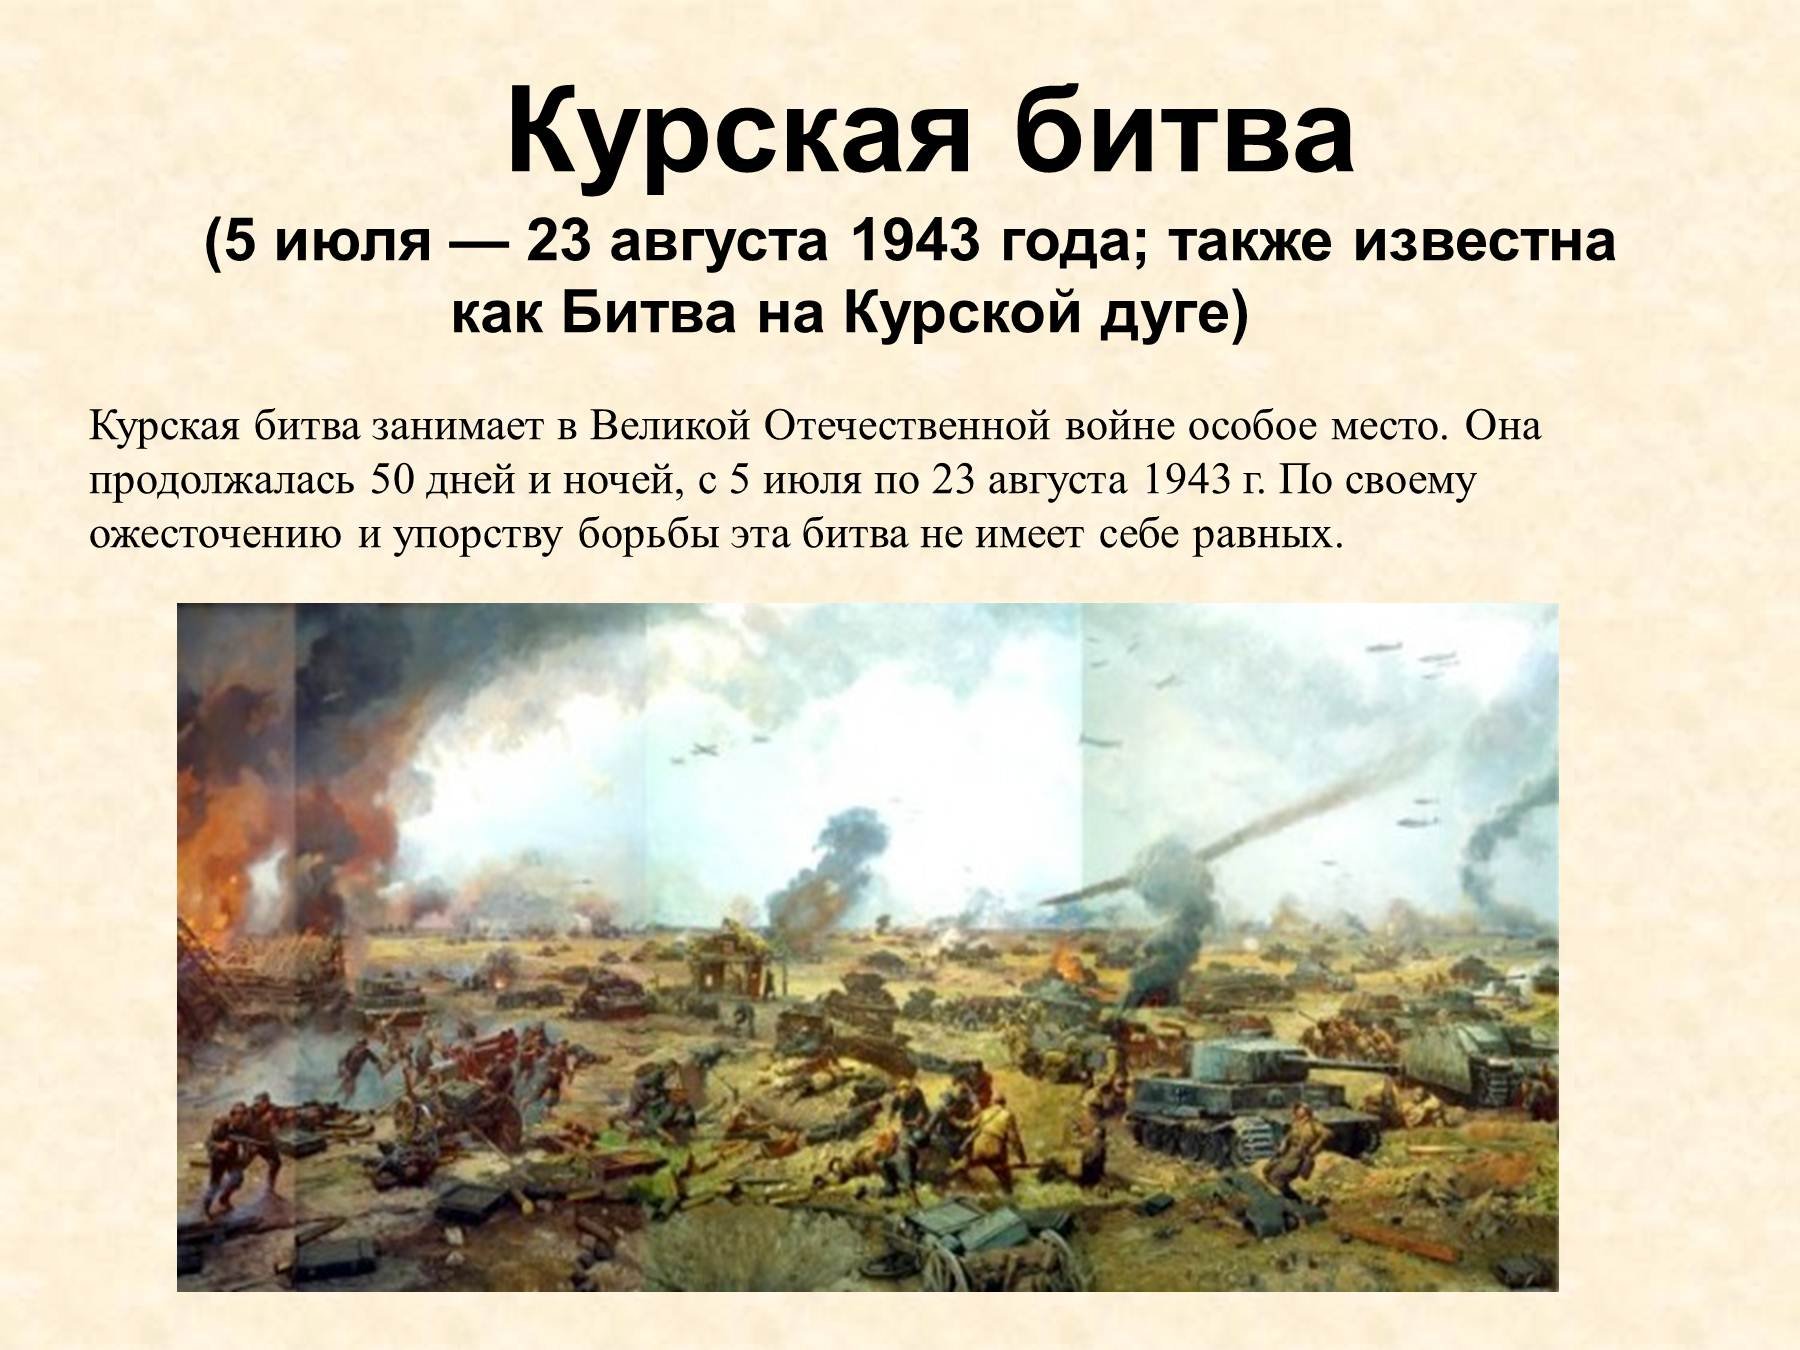 Битва на Курской дуге 5 июля 23 августа 1943 г